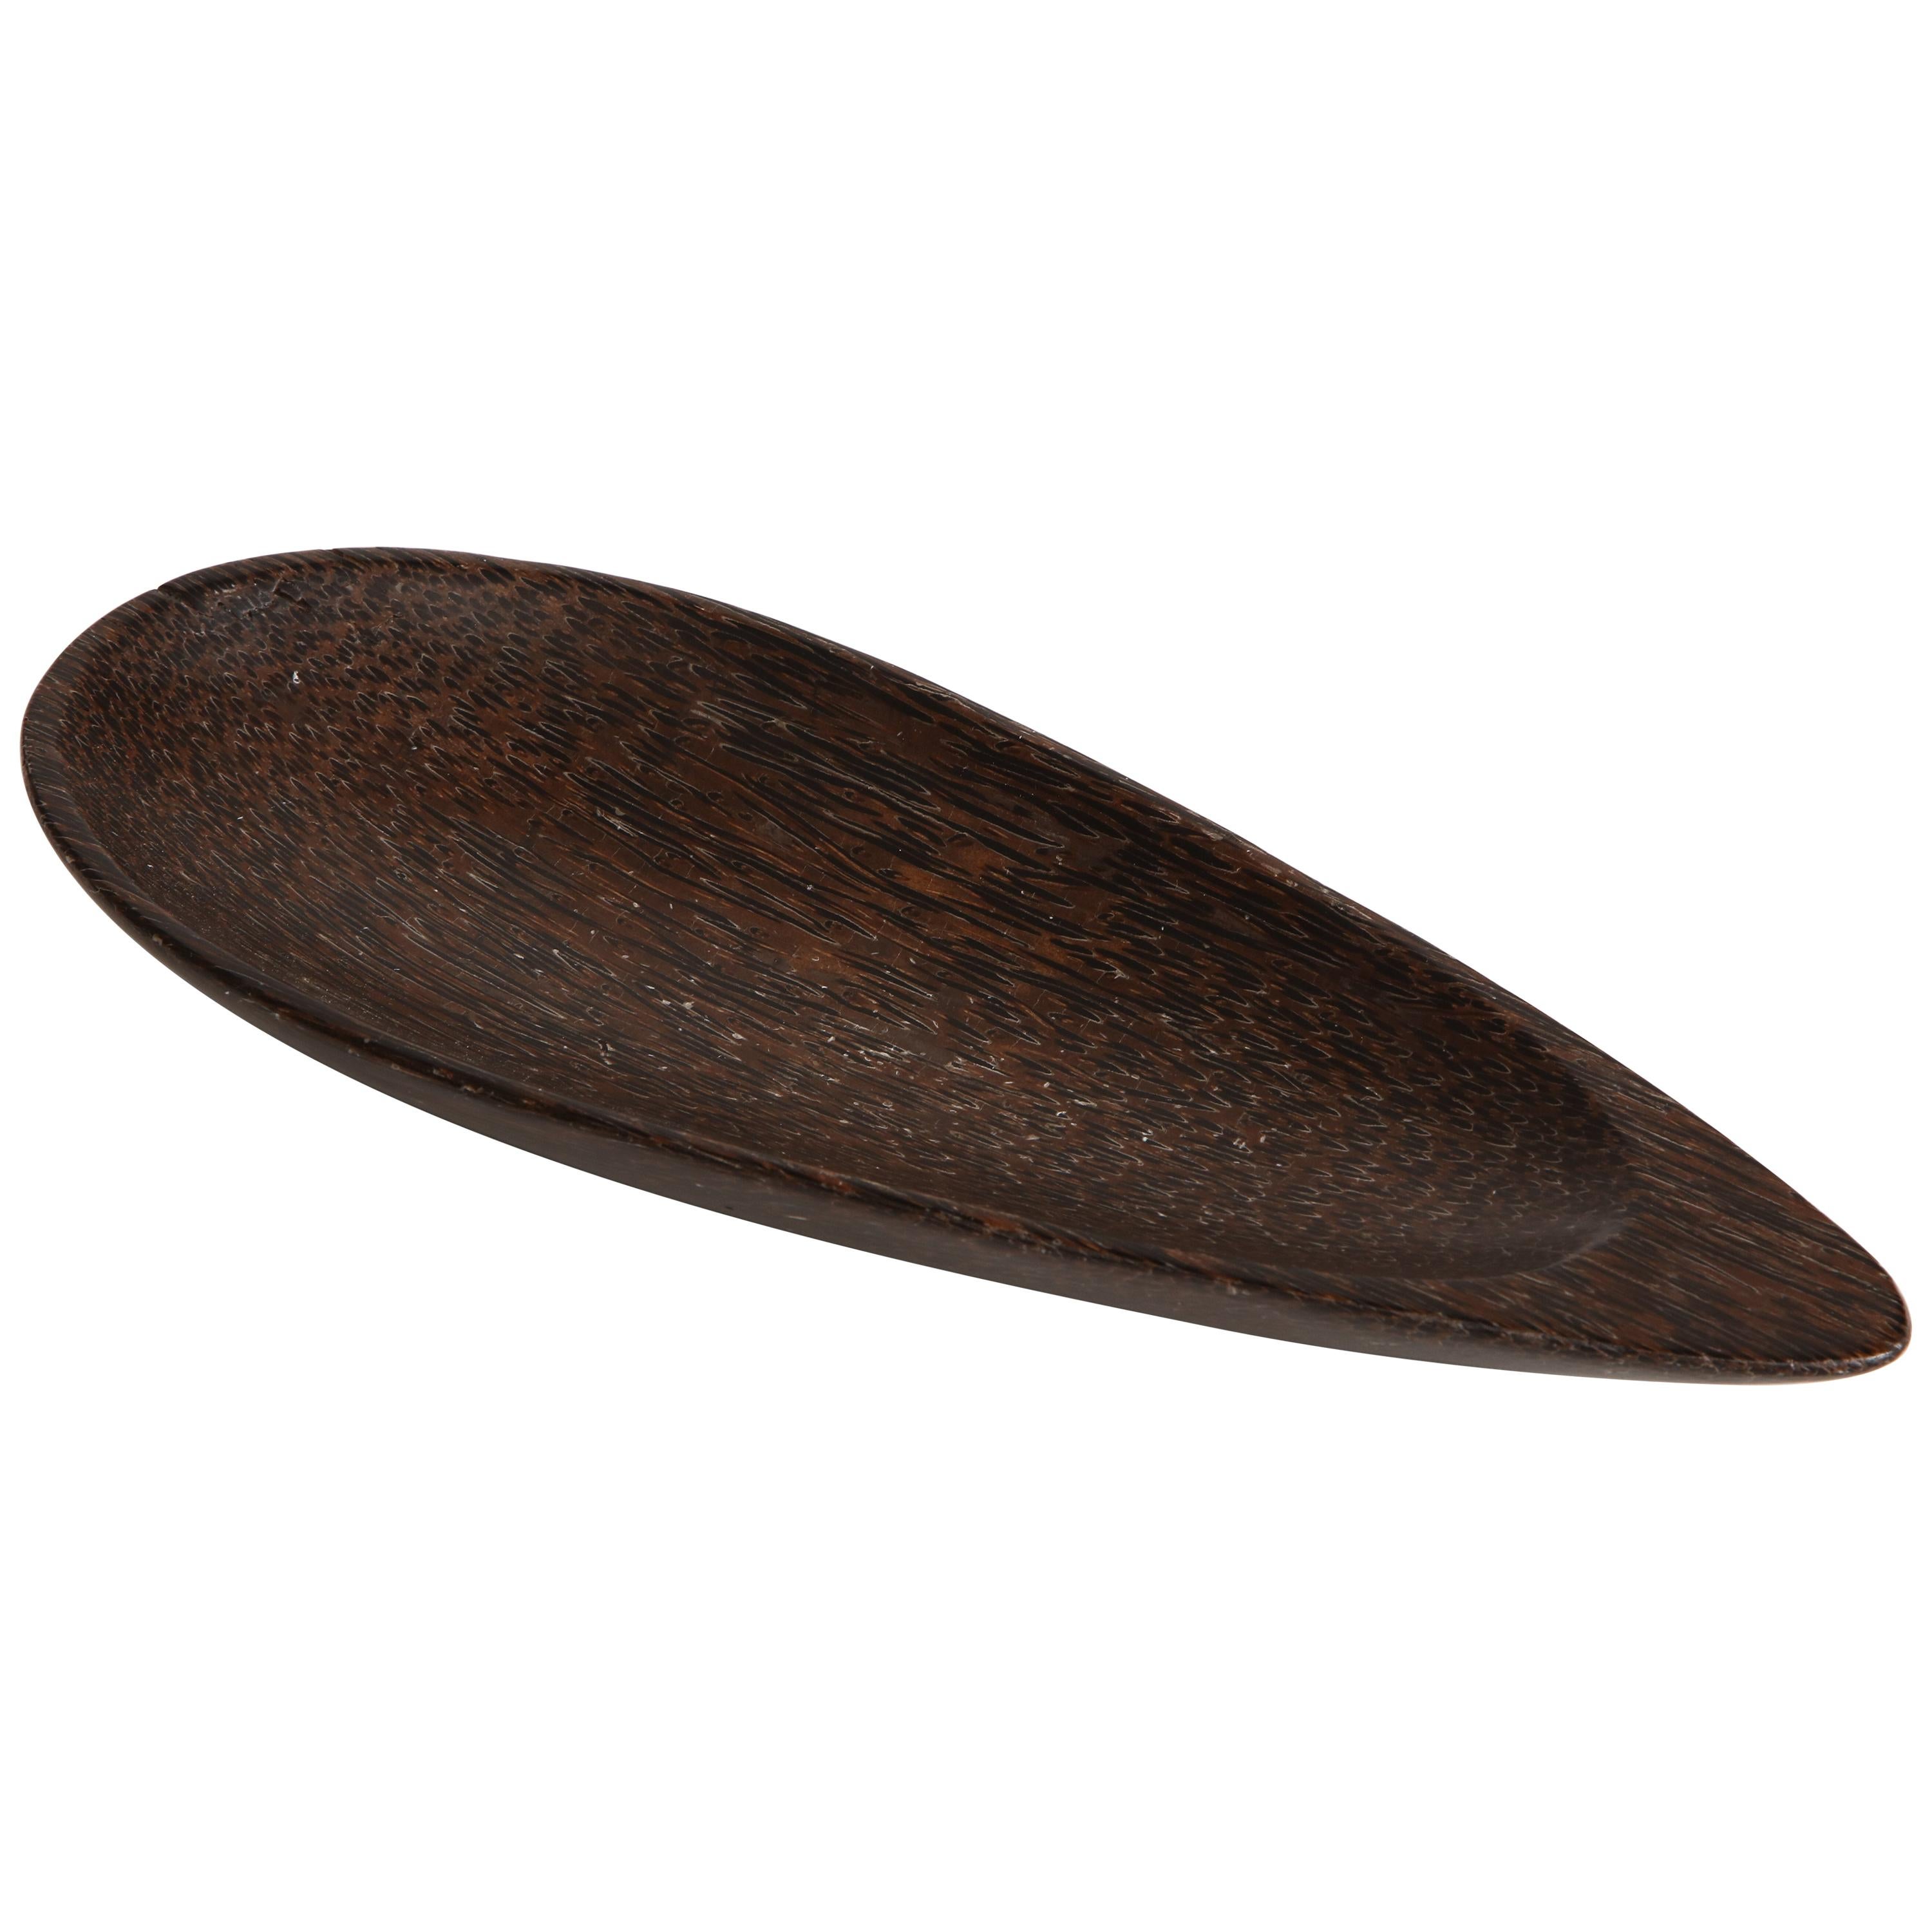 Almondförmige Schale aus massivem dunklem Palmenholz